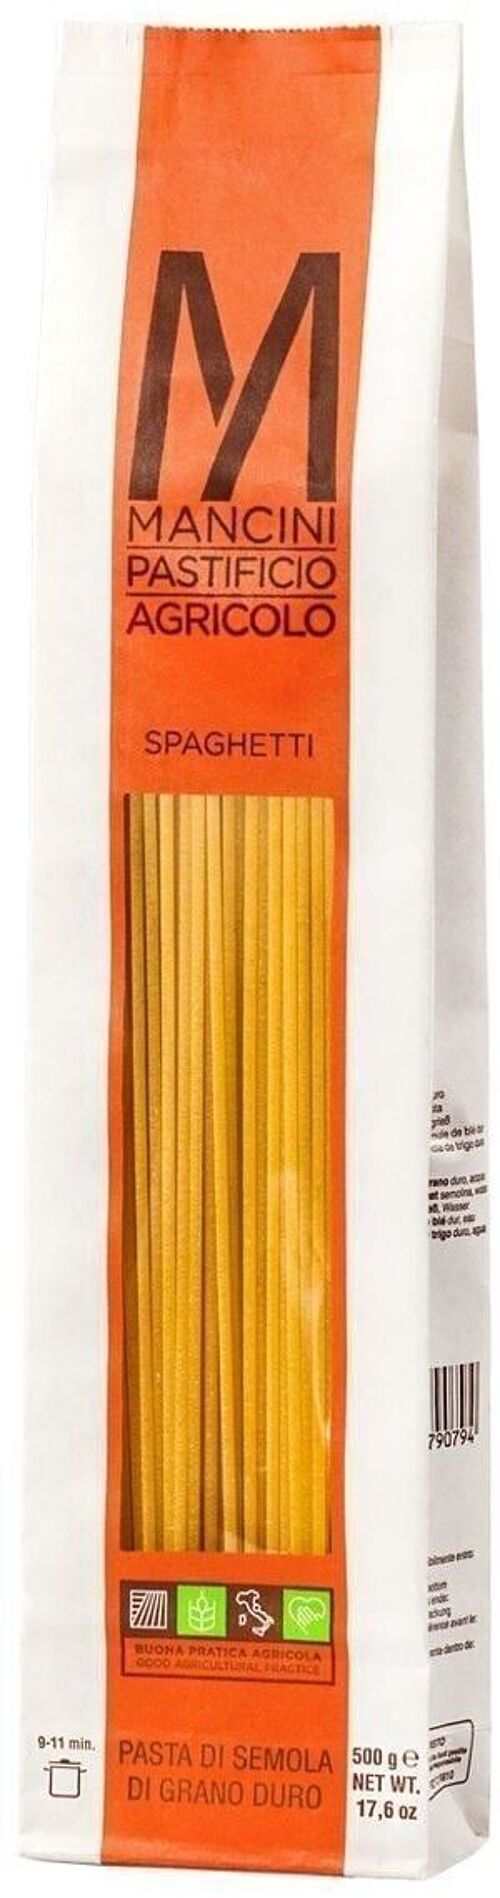 Spaghetti Ø 2,2Mm